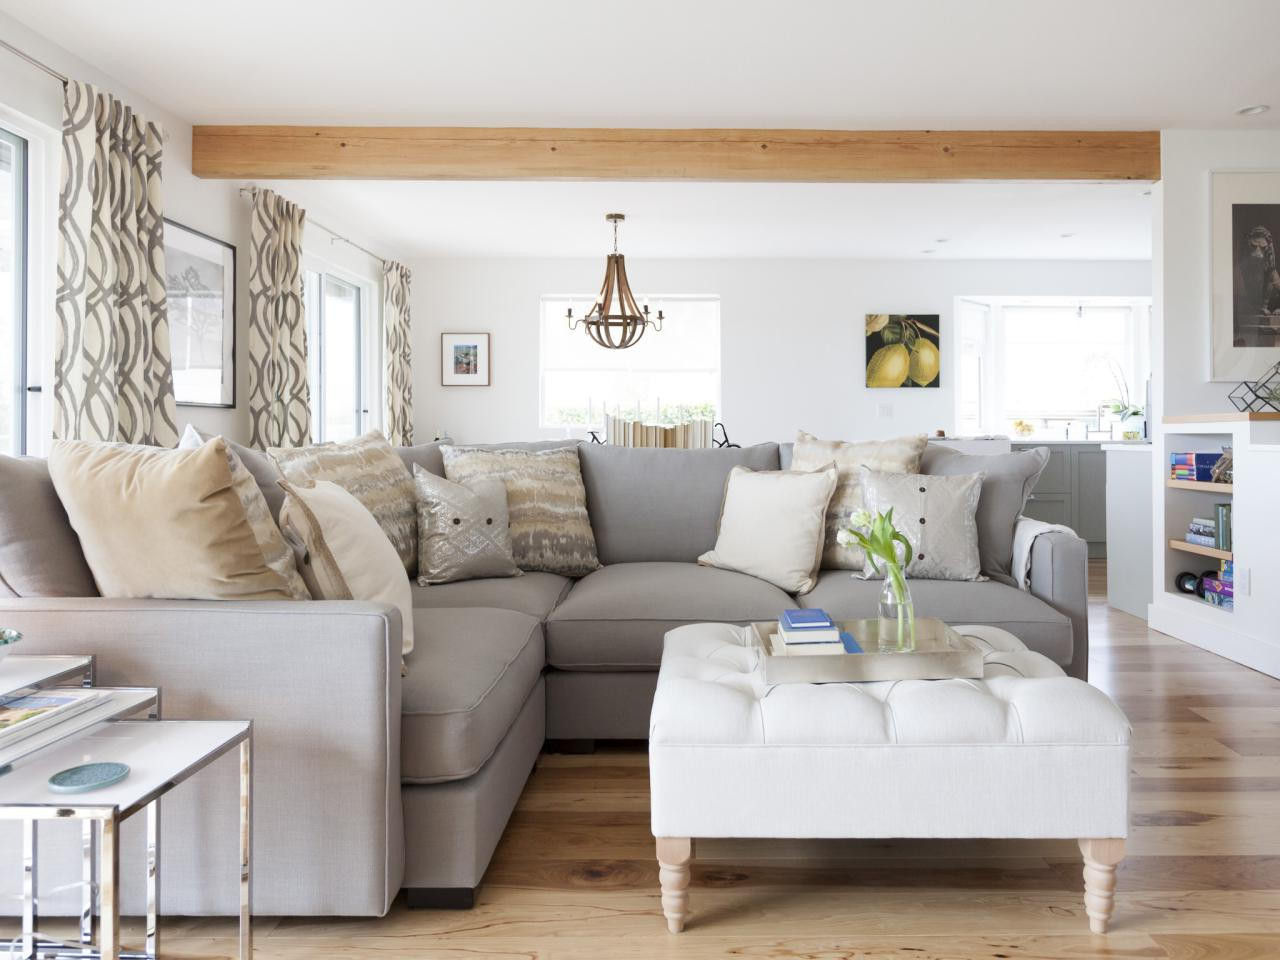 Modern Living Room Sectionals
 Living Room Ideas with Sectionals Sofa for Small Living Room